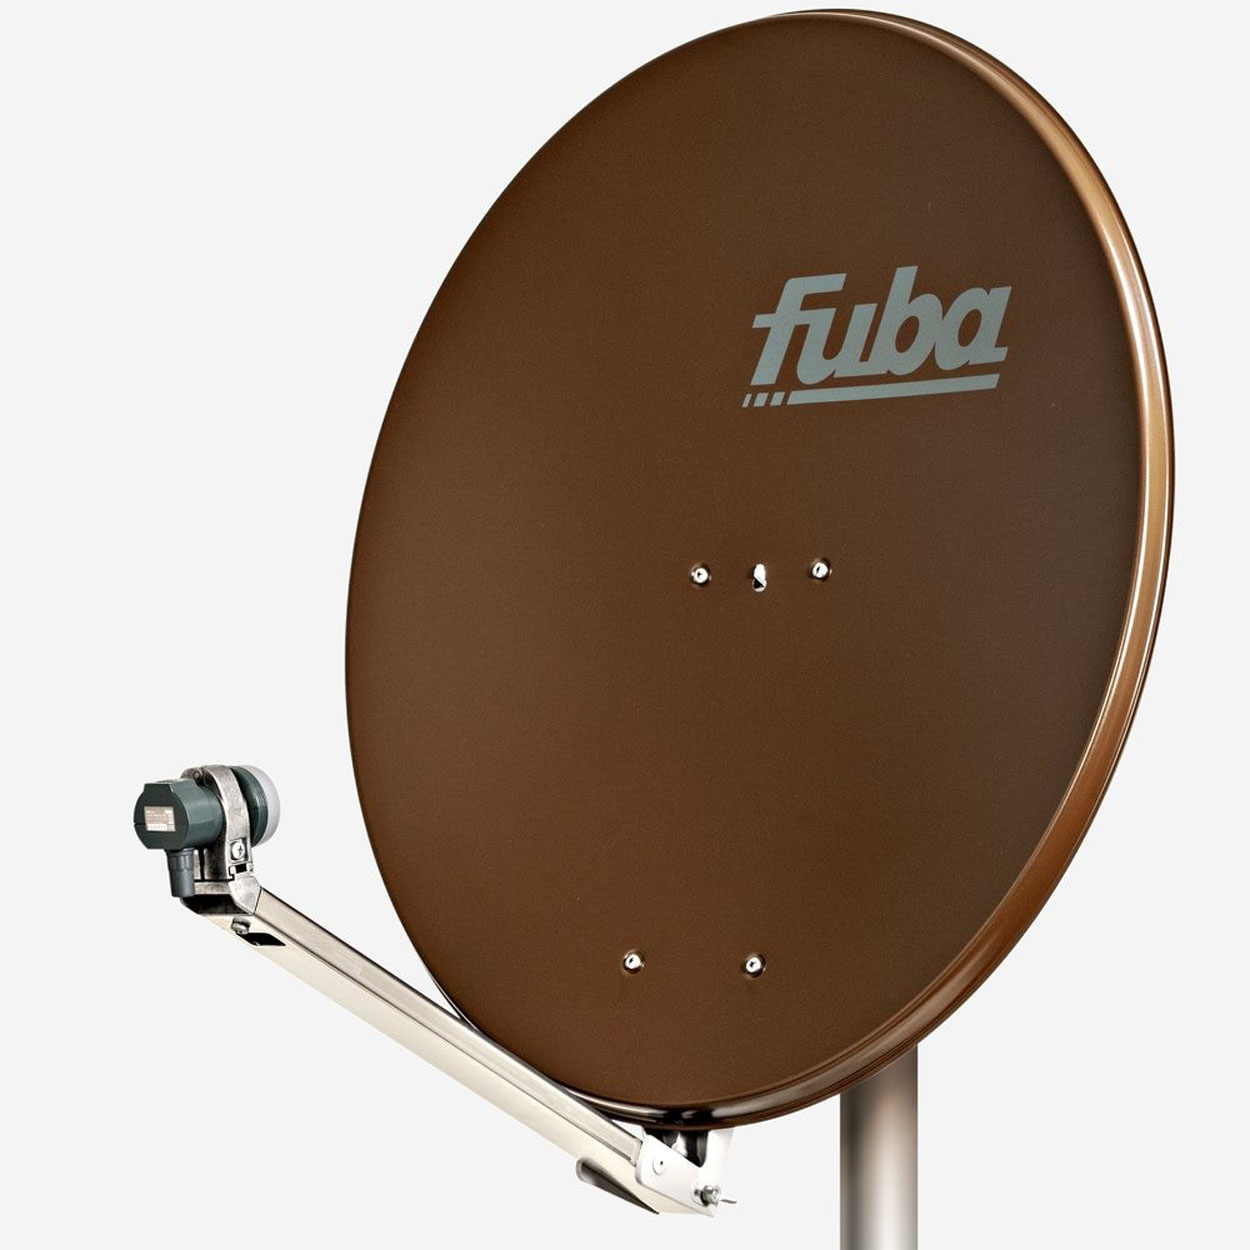 801 FUBA 1 117 Anlage Sat Antenne Single Teilnehmer LNB) Single Sat Spiegel DEK Anlage DAL Schüssel B cm, (80